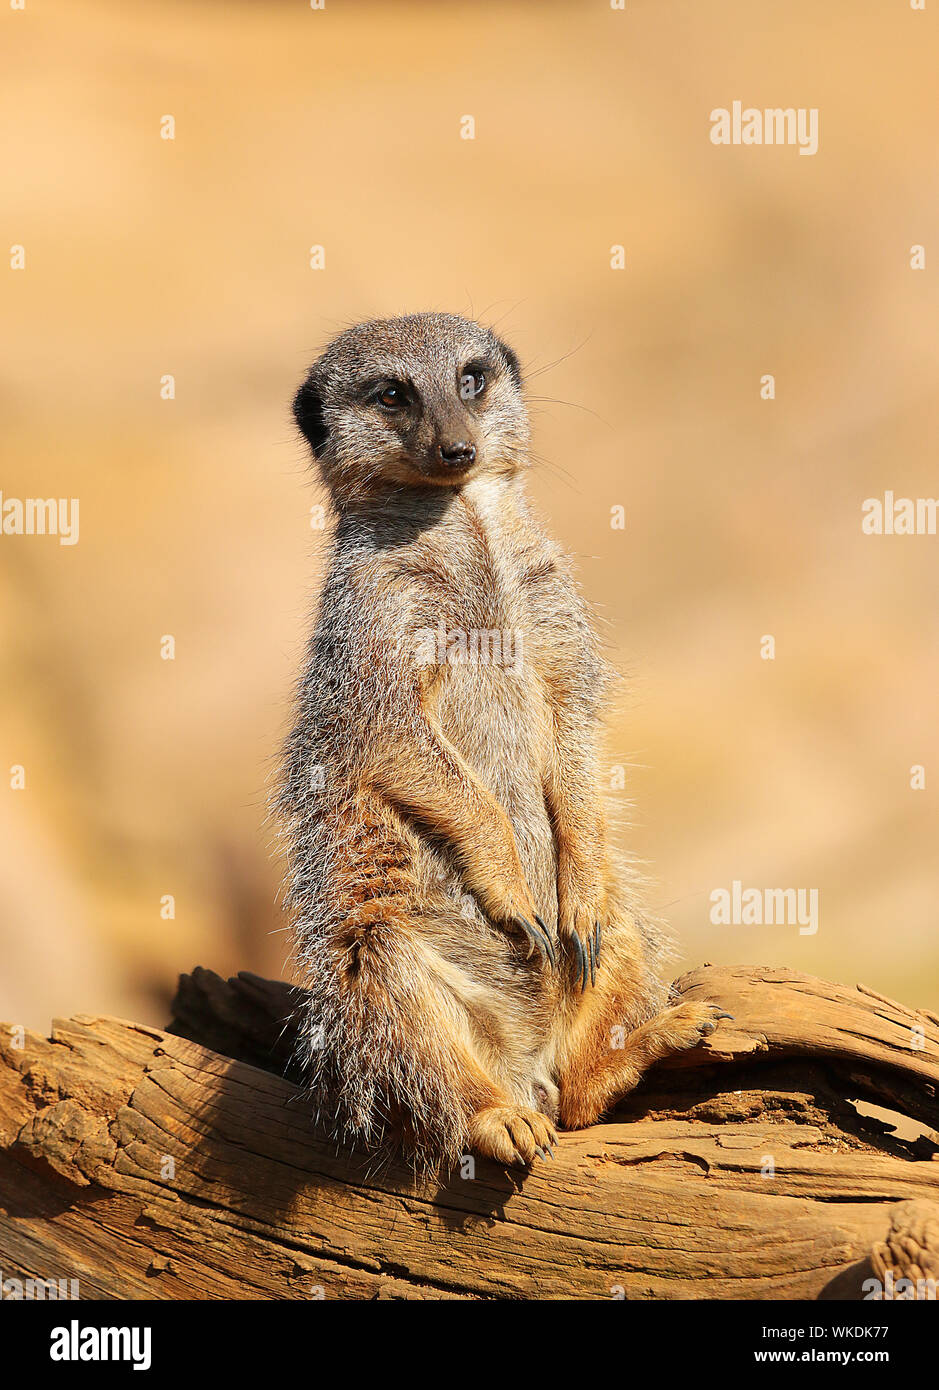 Meerkats (suricata suricatta or suricate) - super cute, gregarious mammals, found in African desert & grassland areas in large social groups. Stock Photo